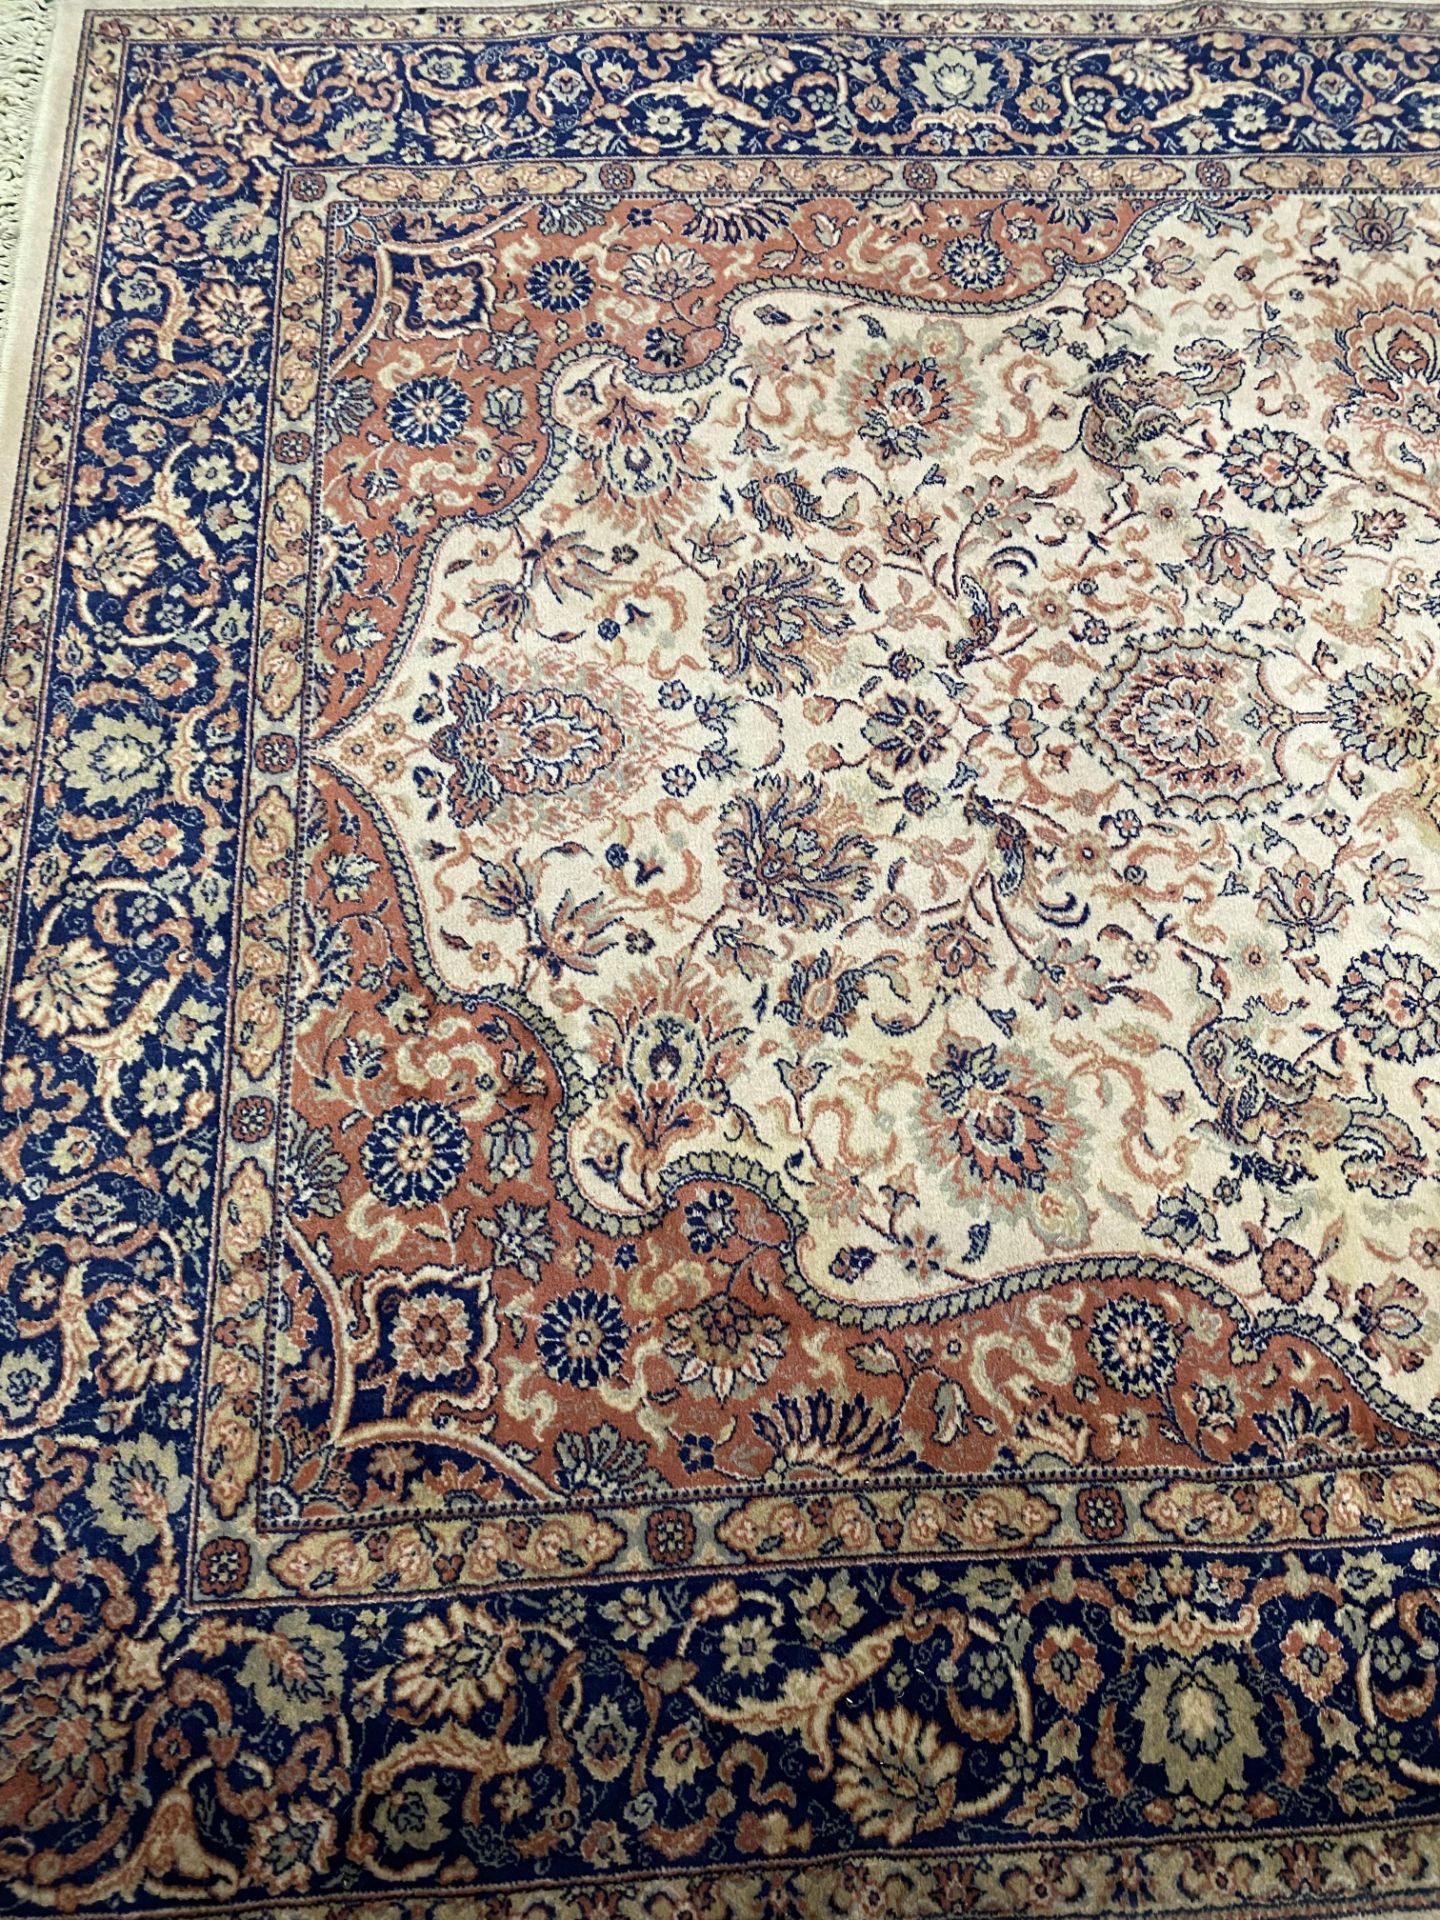 Cream ground wool carpet - Image 5 of 5